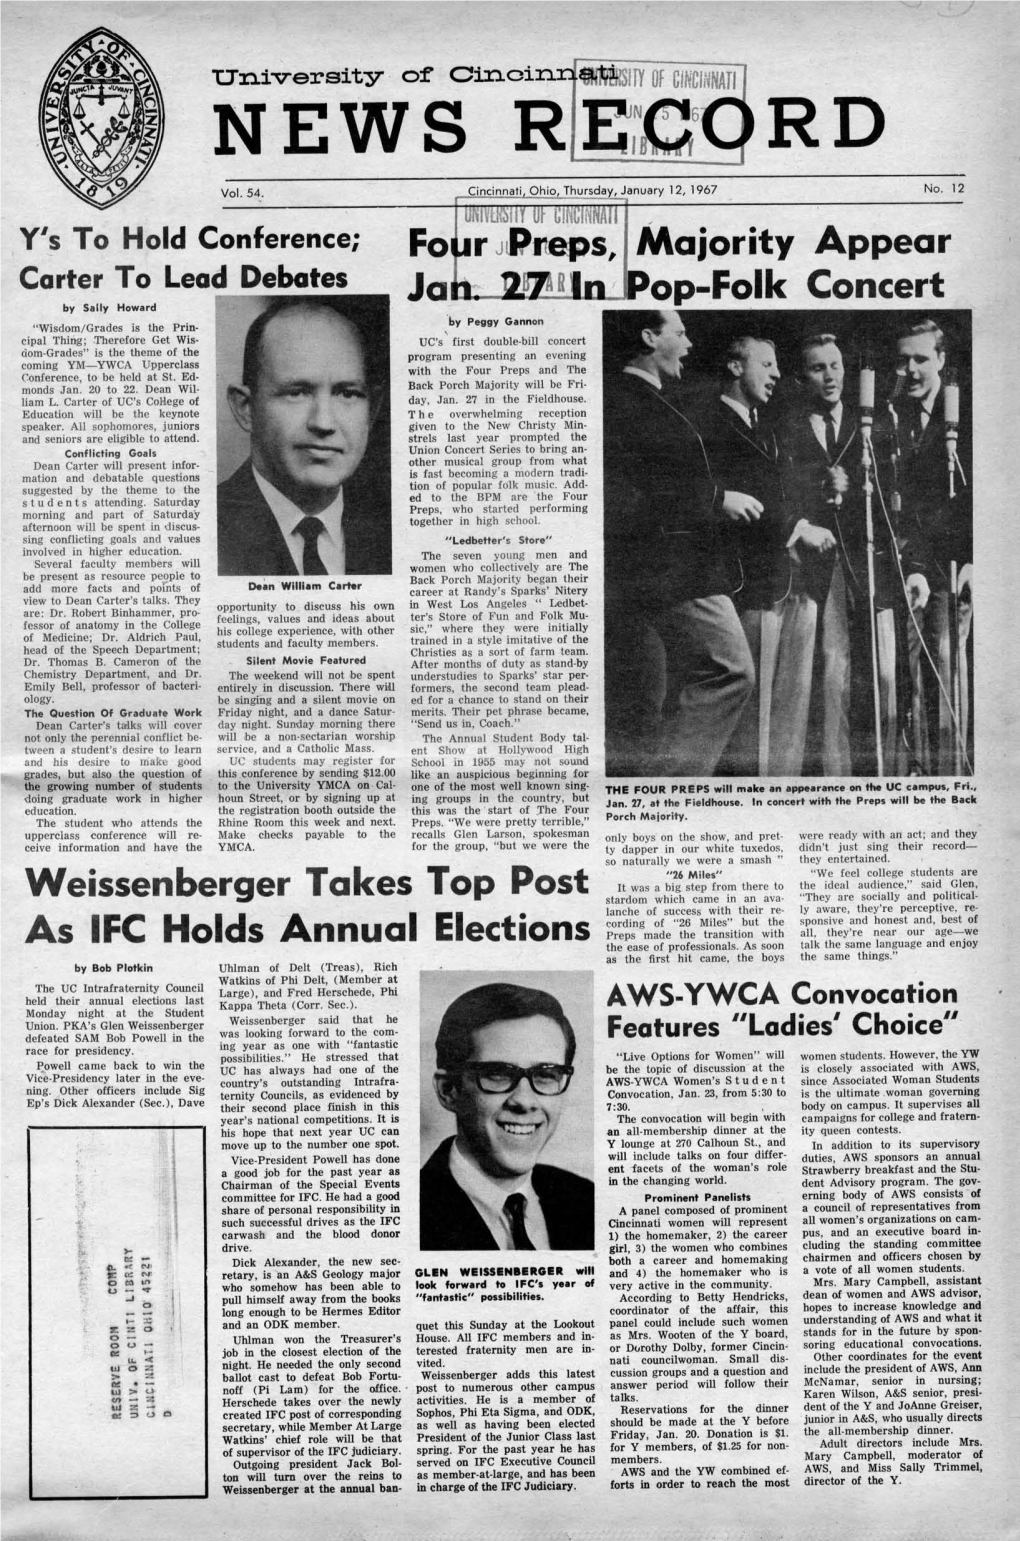 University of Cincinnati News Record. Thursday, January 12, 1967. Vol